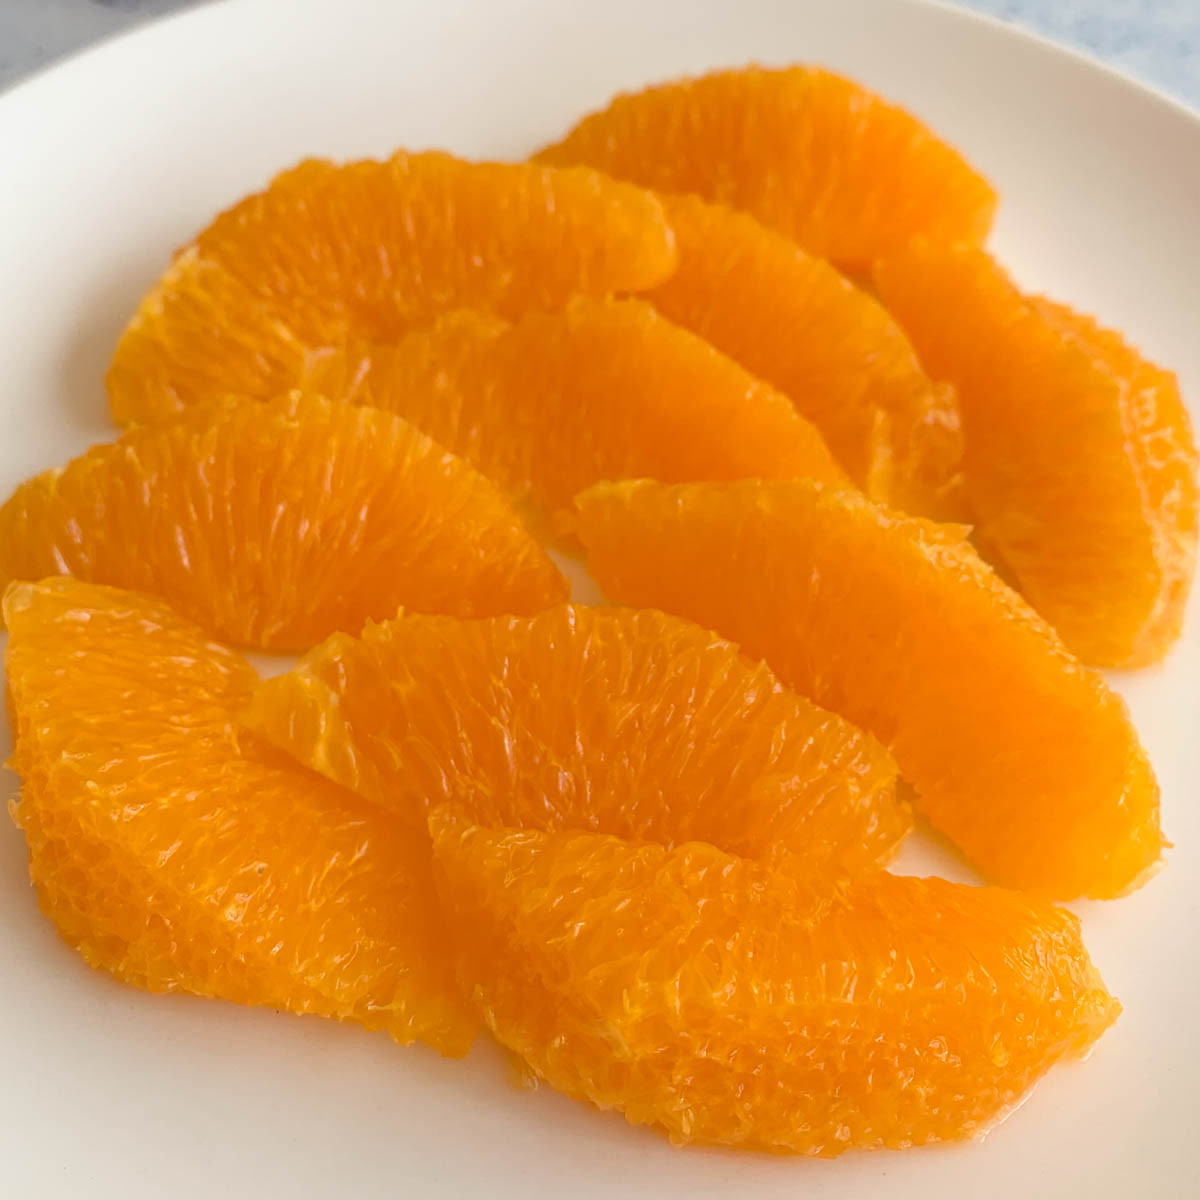 How to cut orange into segments